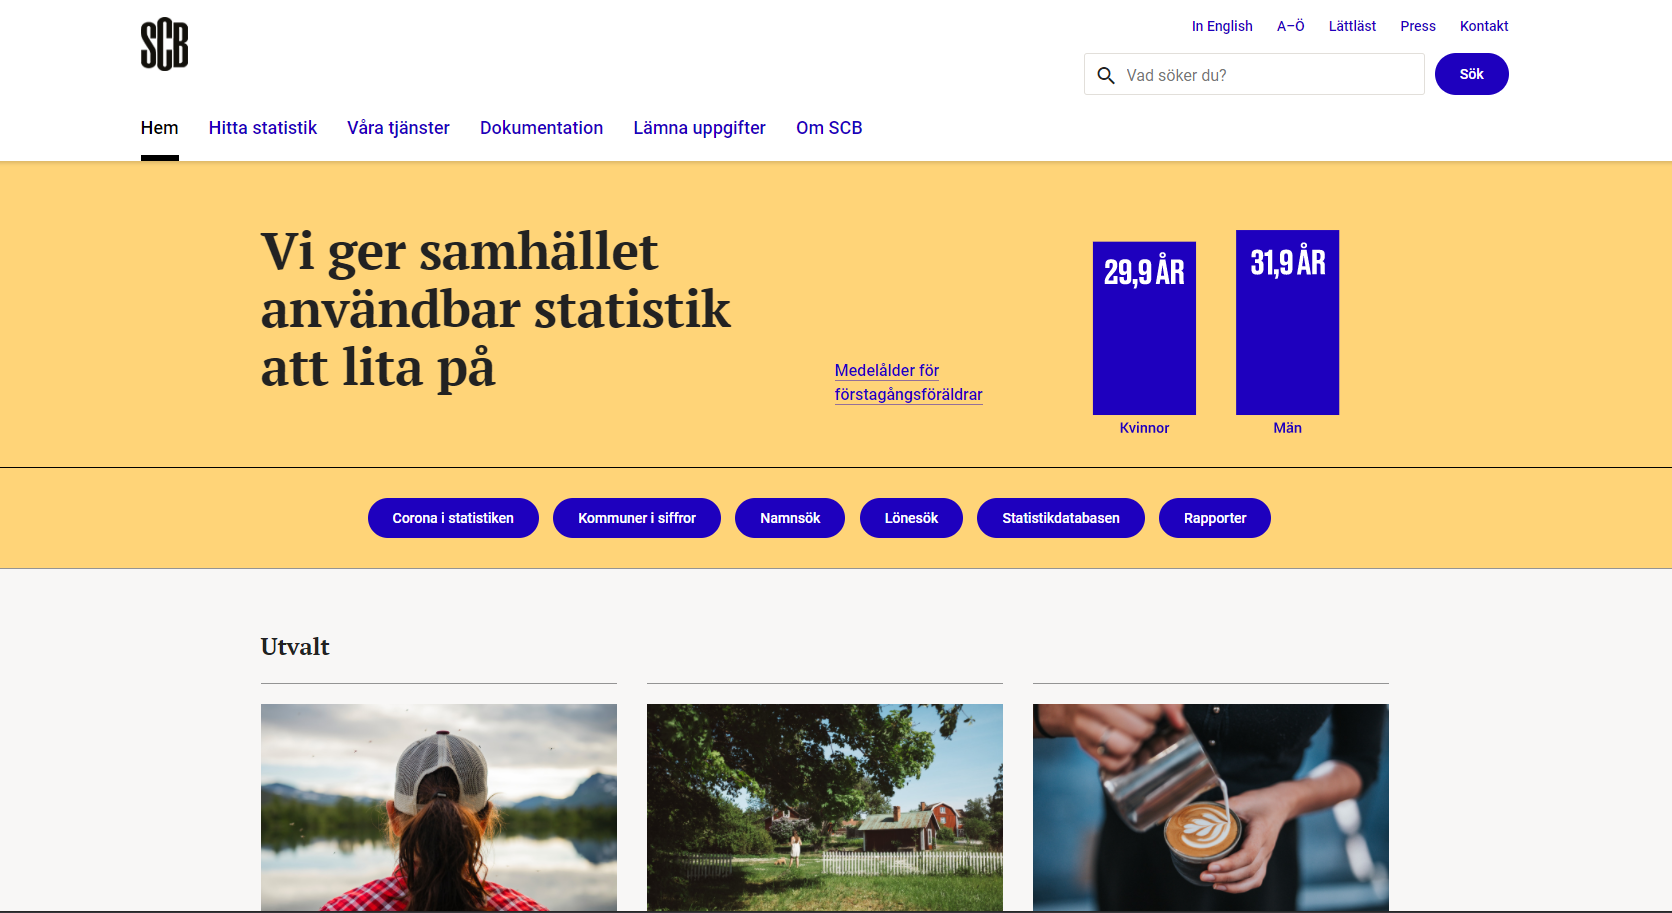 Oficina Central de Estadísticas de Suecia adoptó licencia CC 0